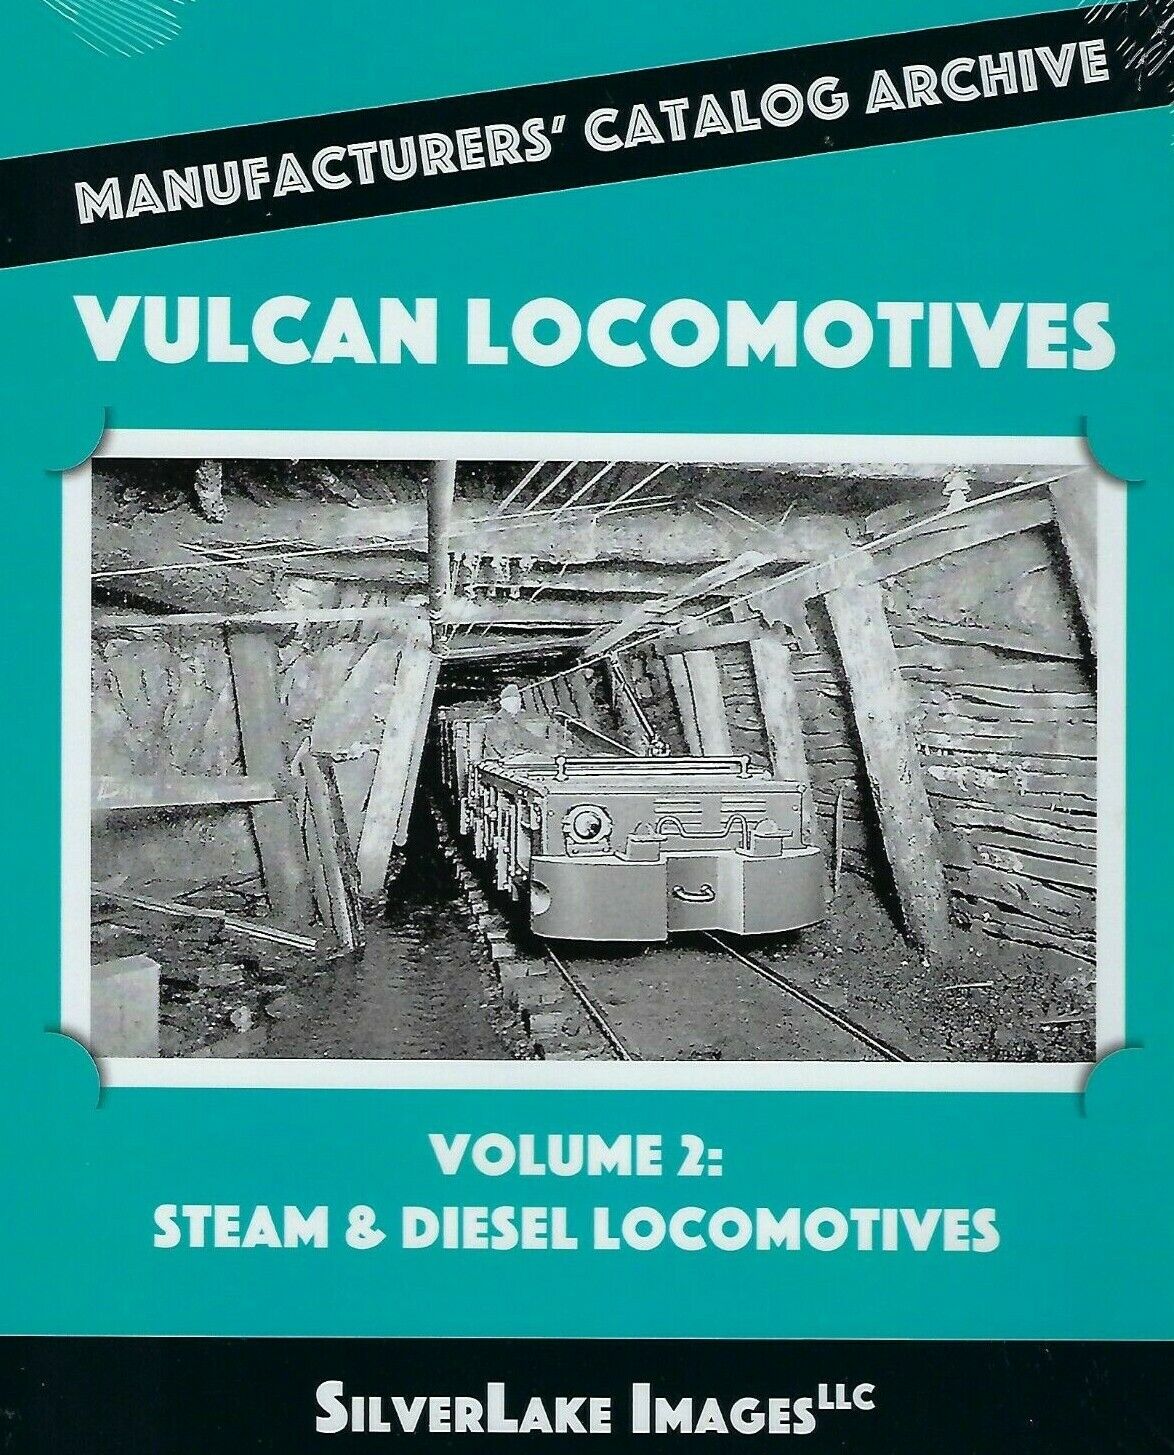 VULCAN LOCOMOTIVES, Vol. 2: Steam & Diesel from Mfgs. Catalog Archive BRAND NEW